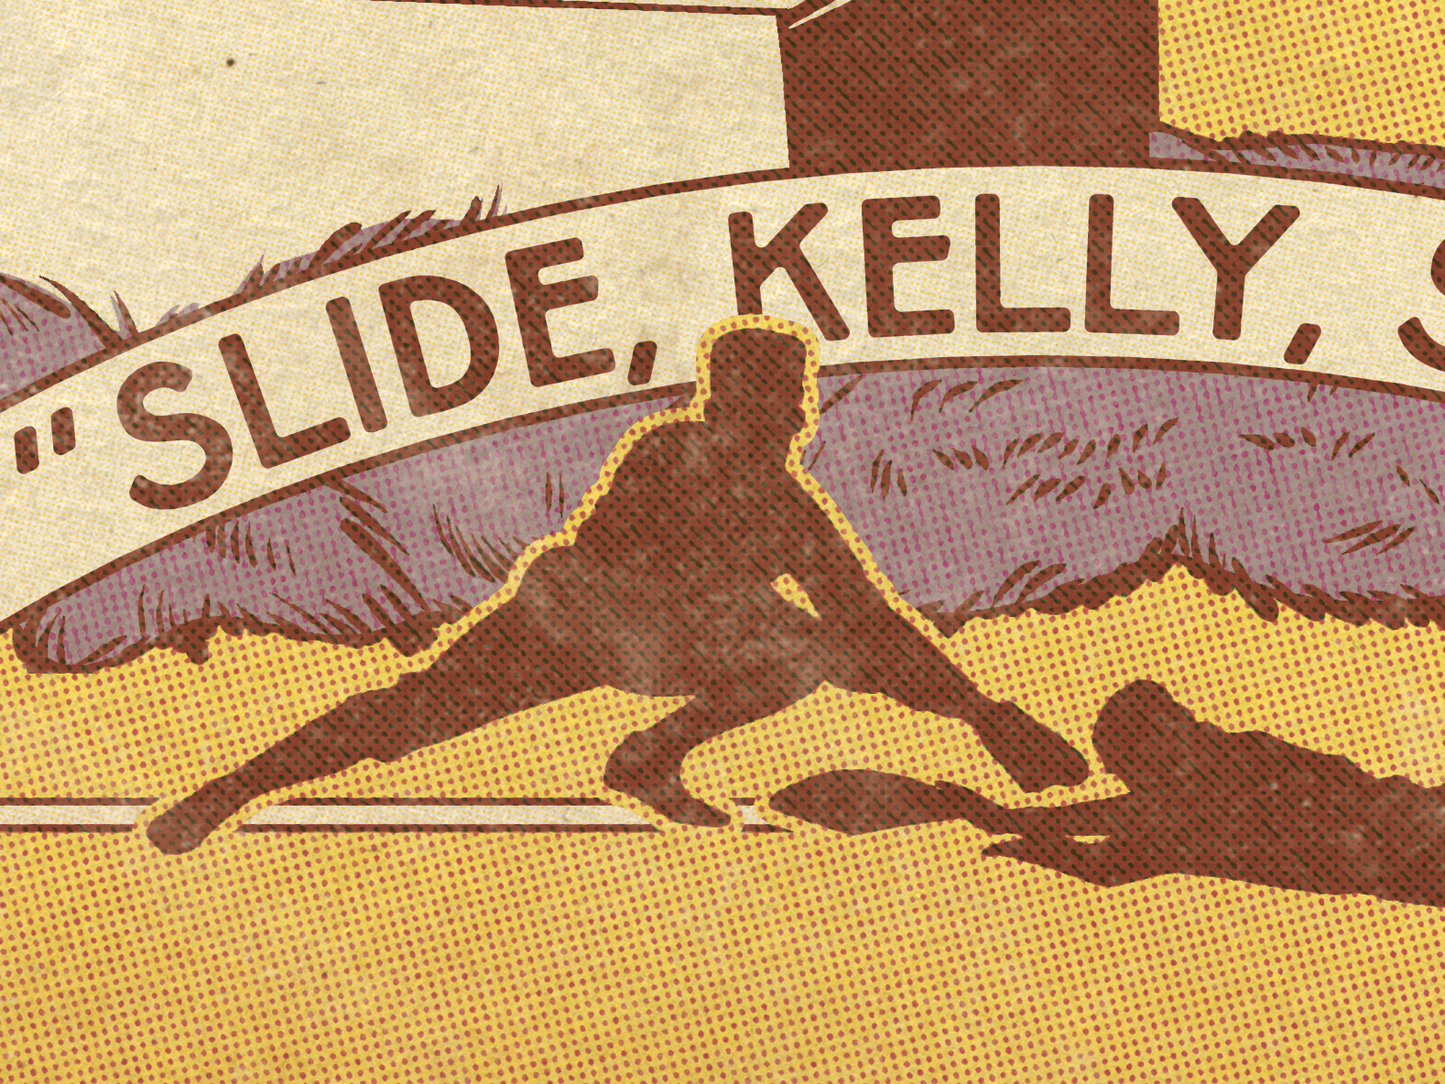 154. "King Kelly" 7" x 10.5" Art Print